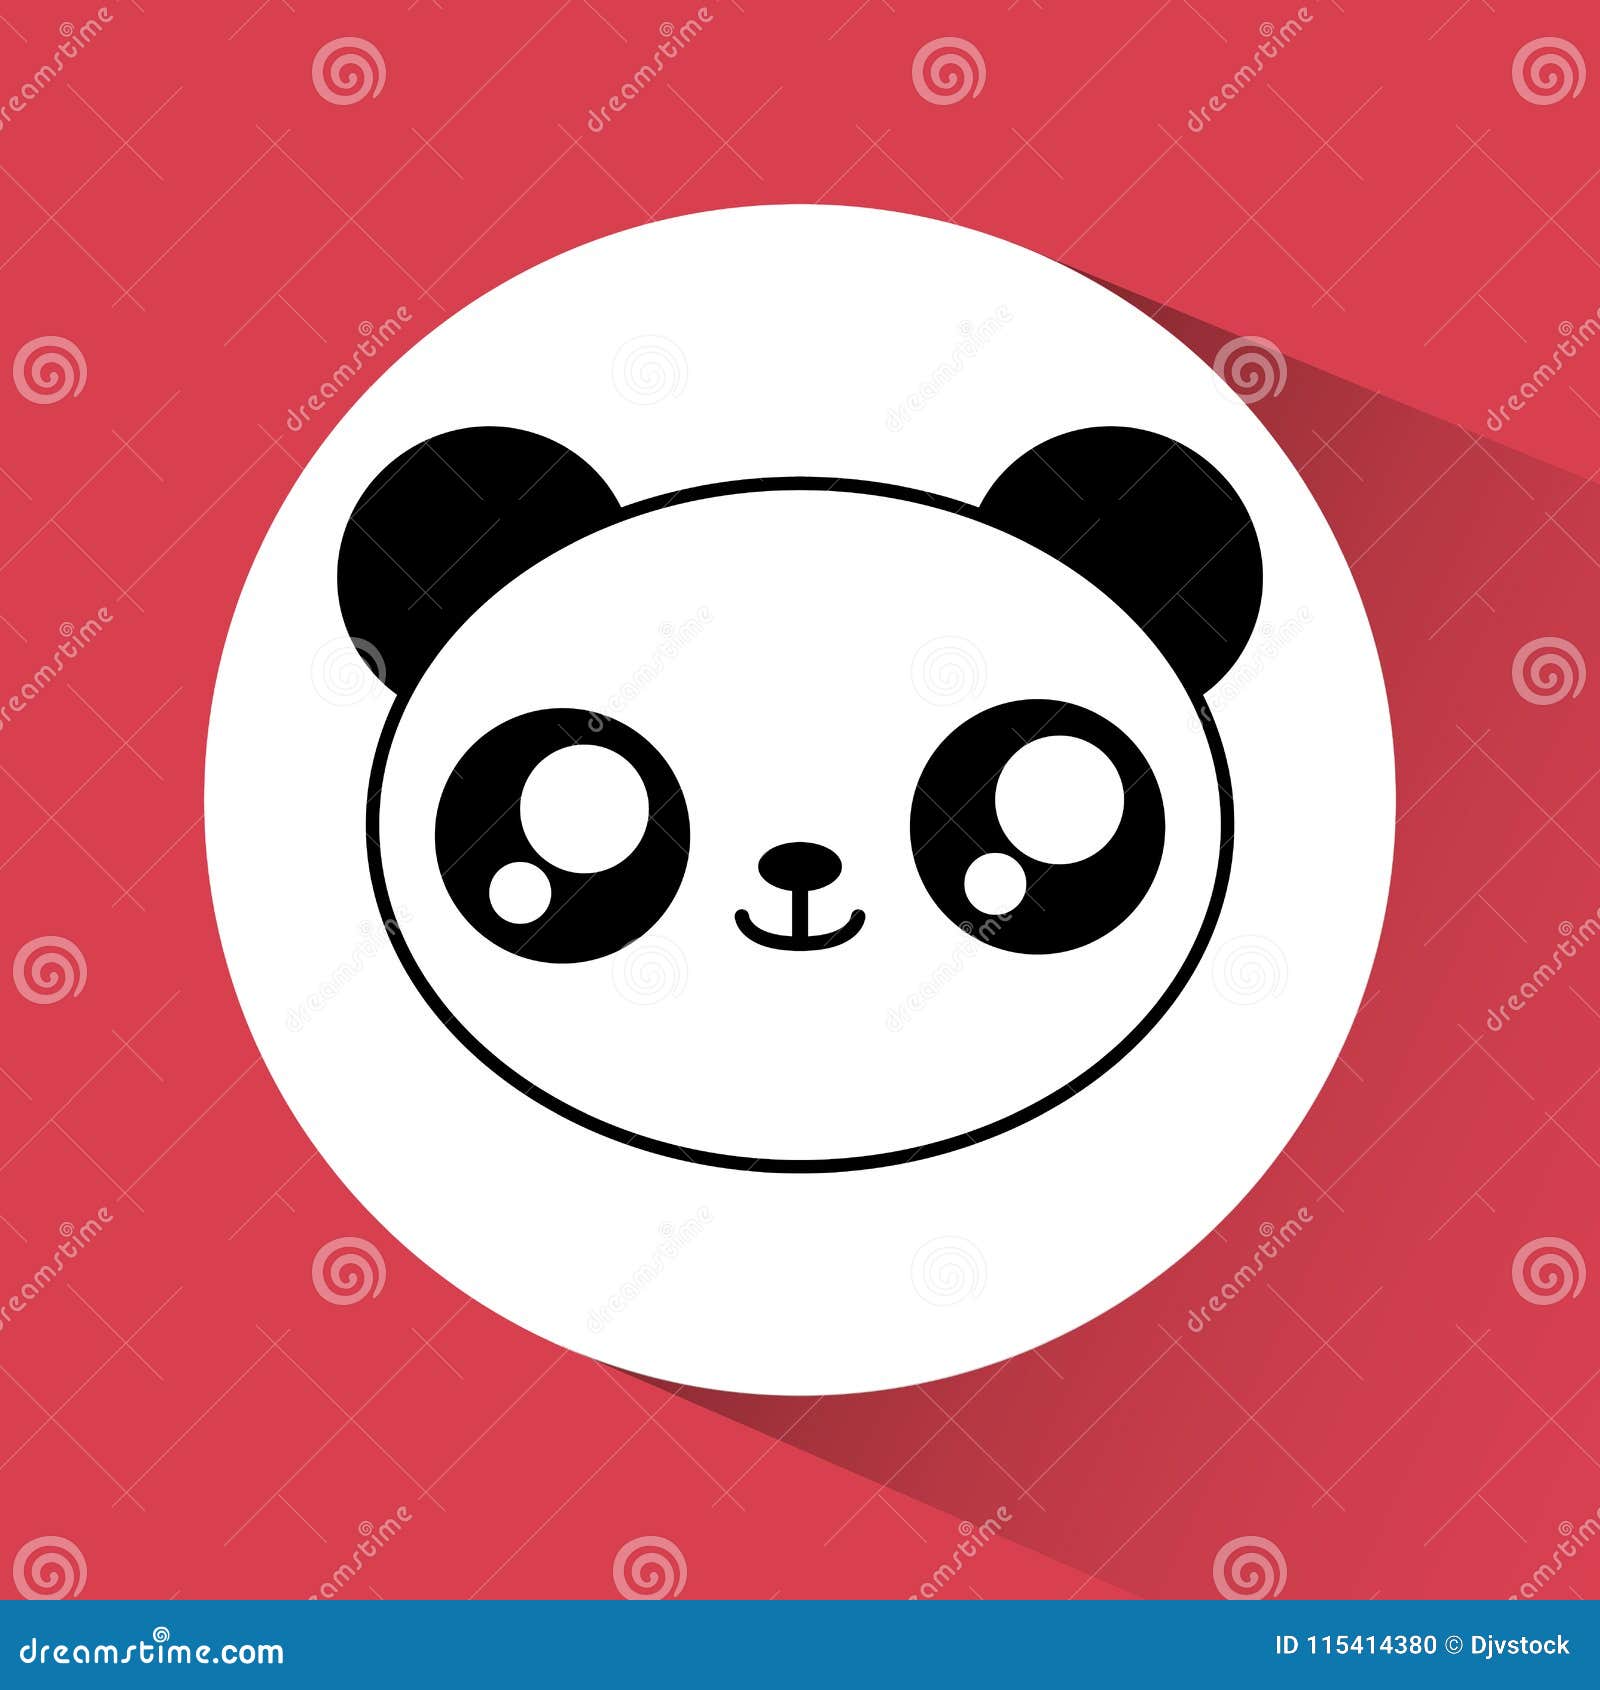 Kawaii Panda Icon Cute Animal Vector Graphic Stock Vector